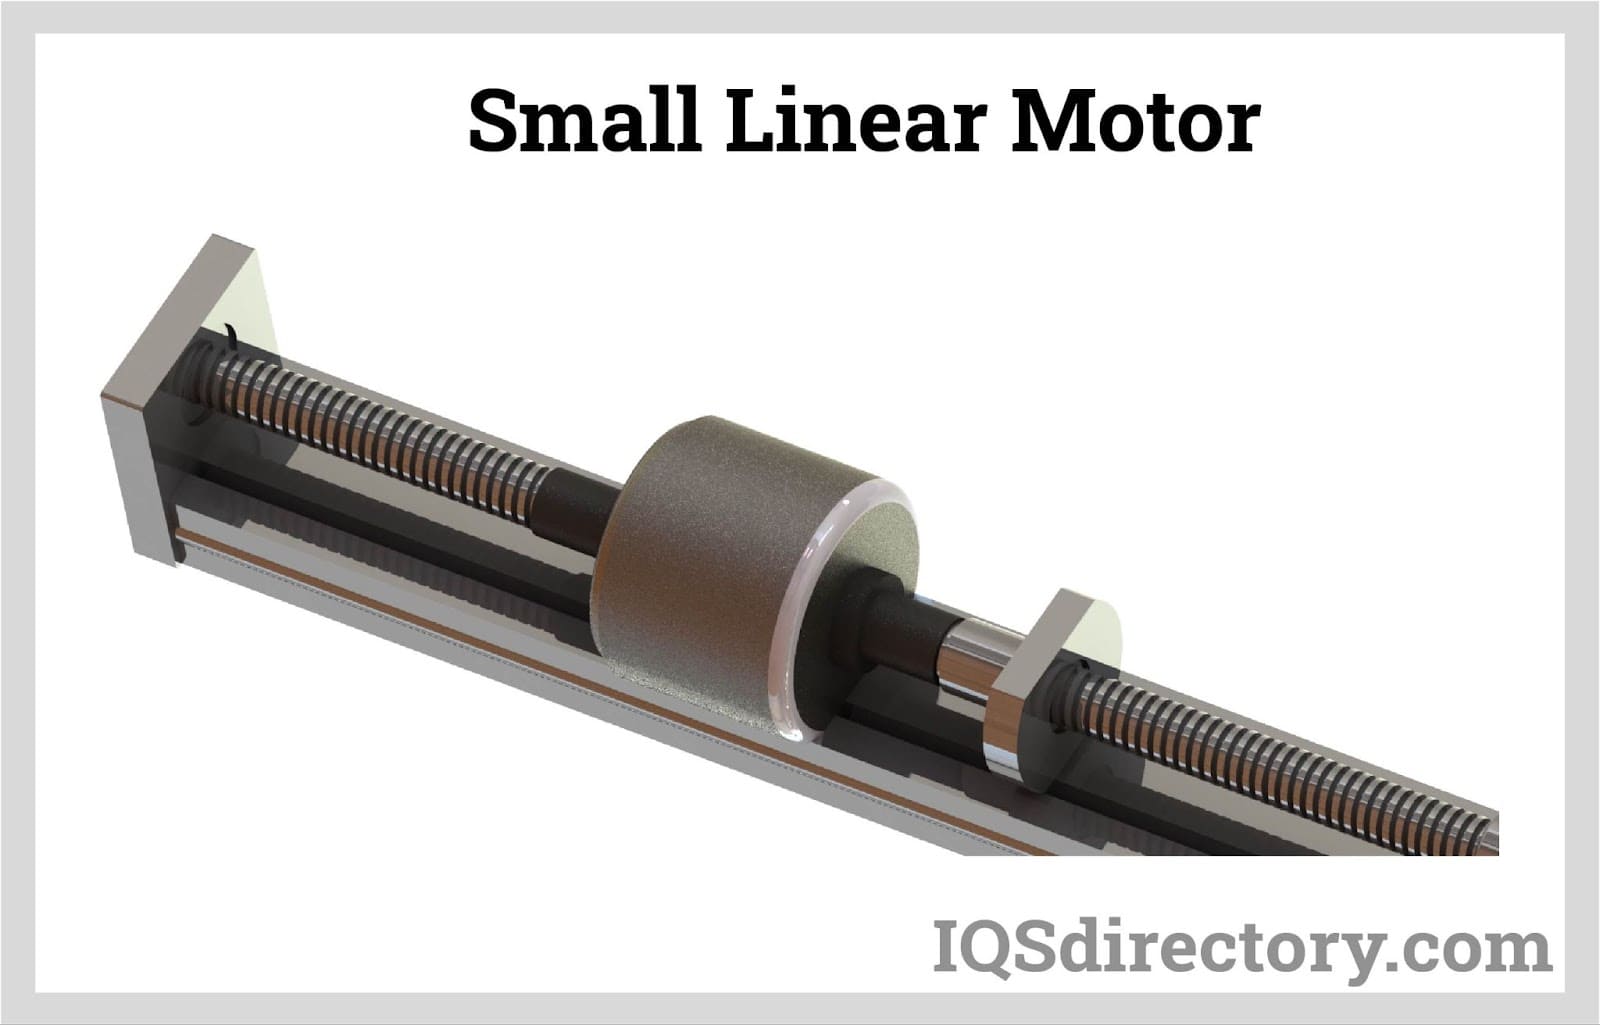 Small Linear Motor